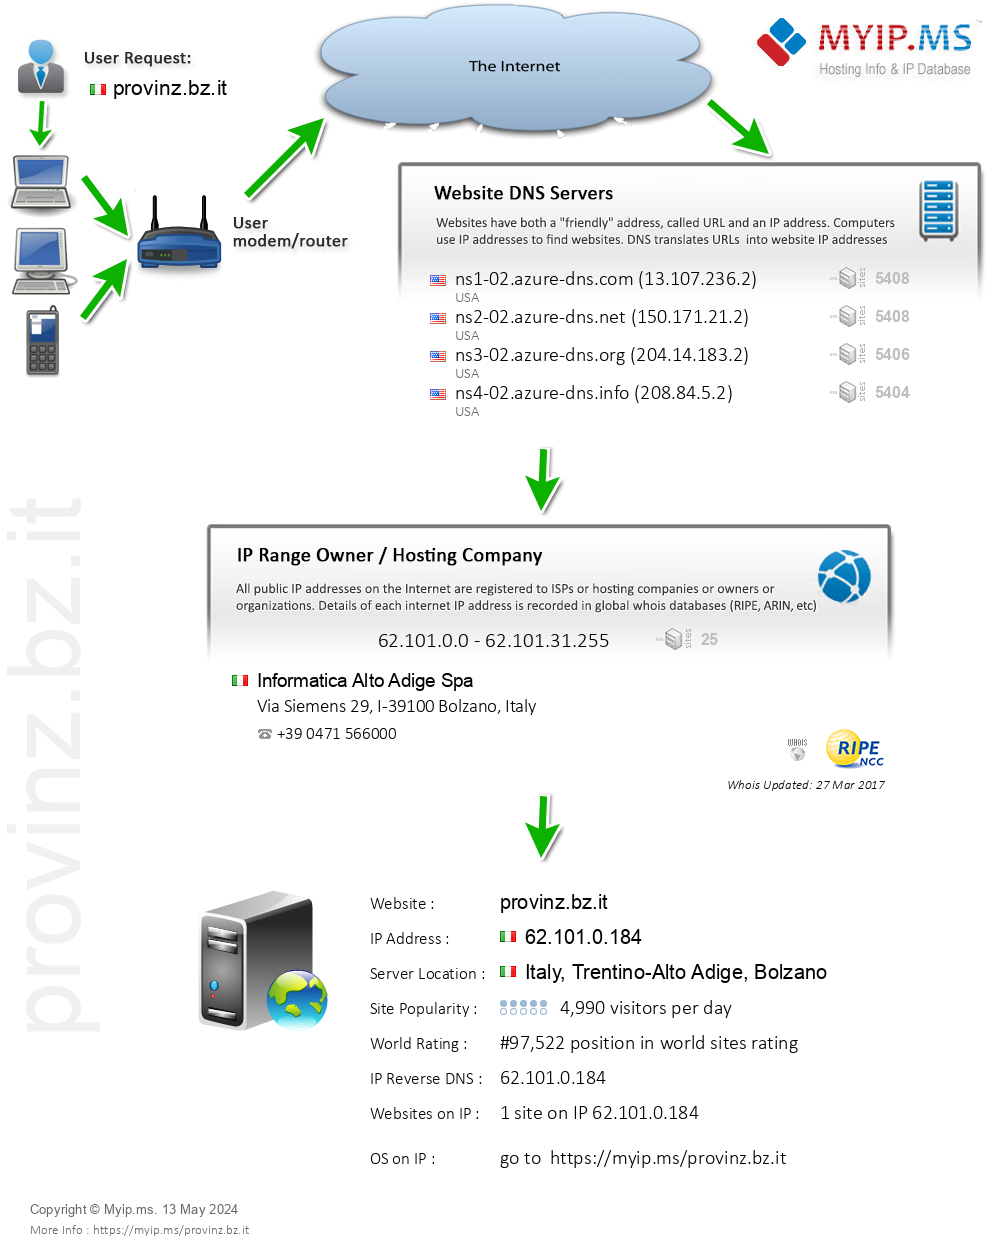 Provinz.bz.it - Website Hosting Visual IP Diagram